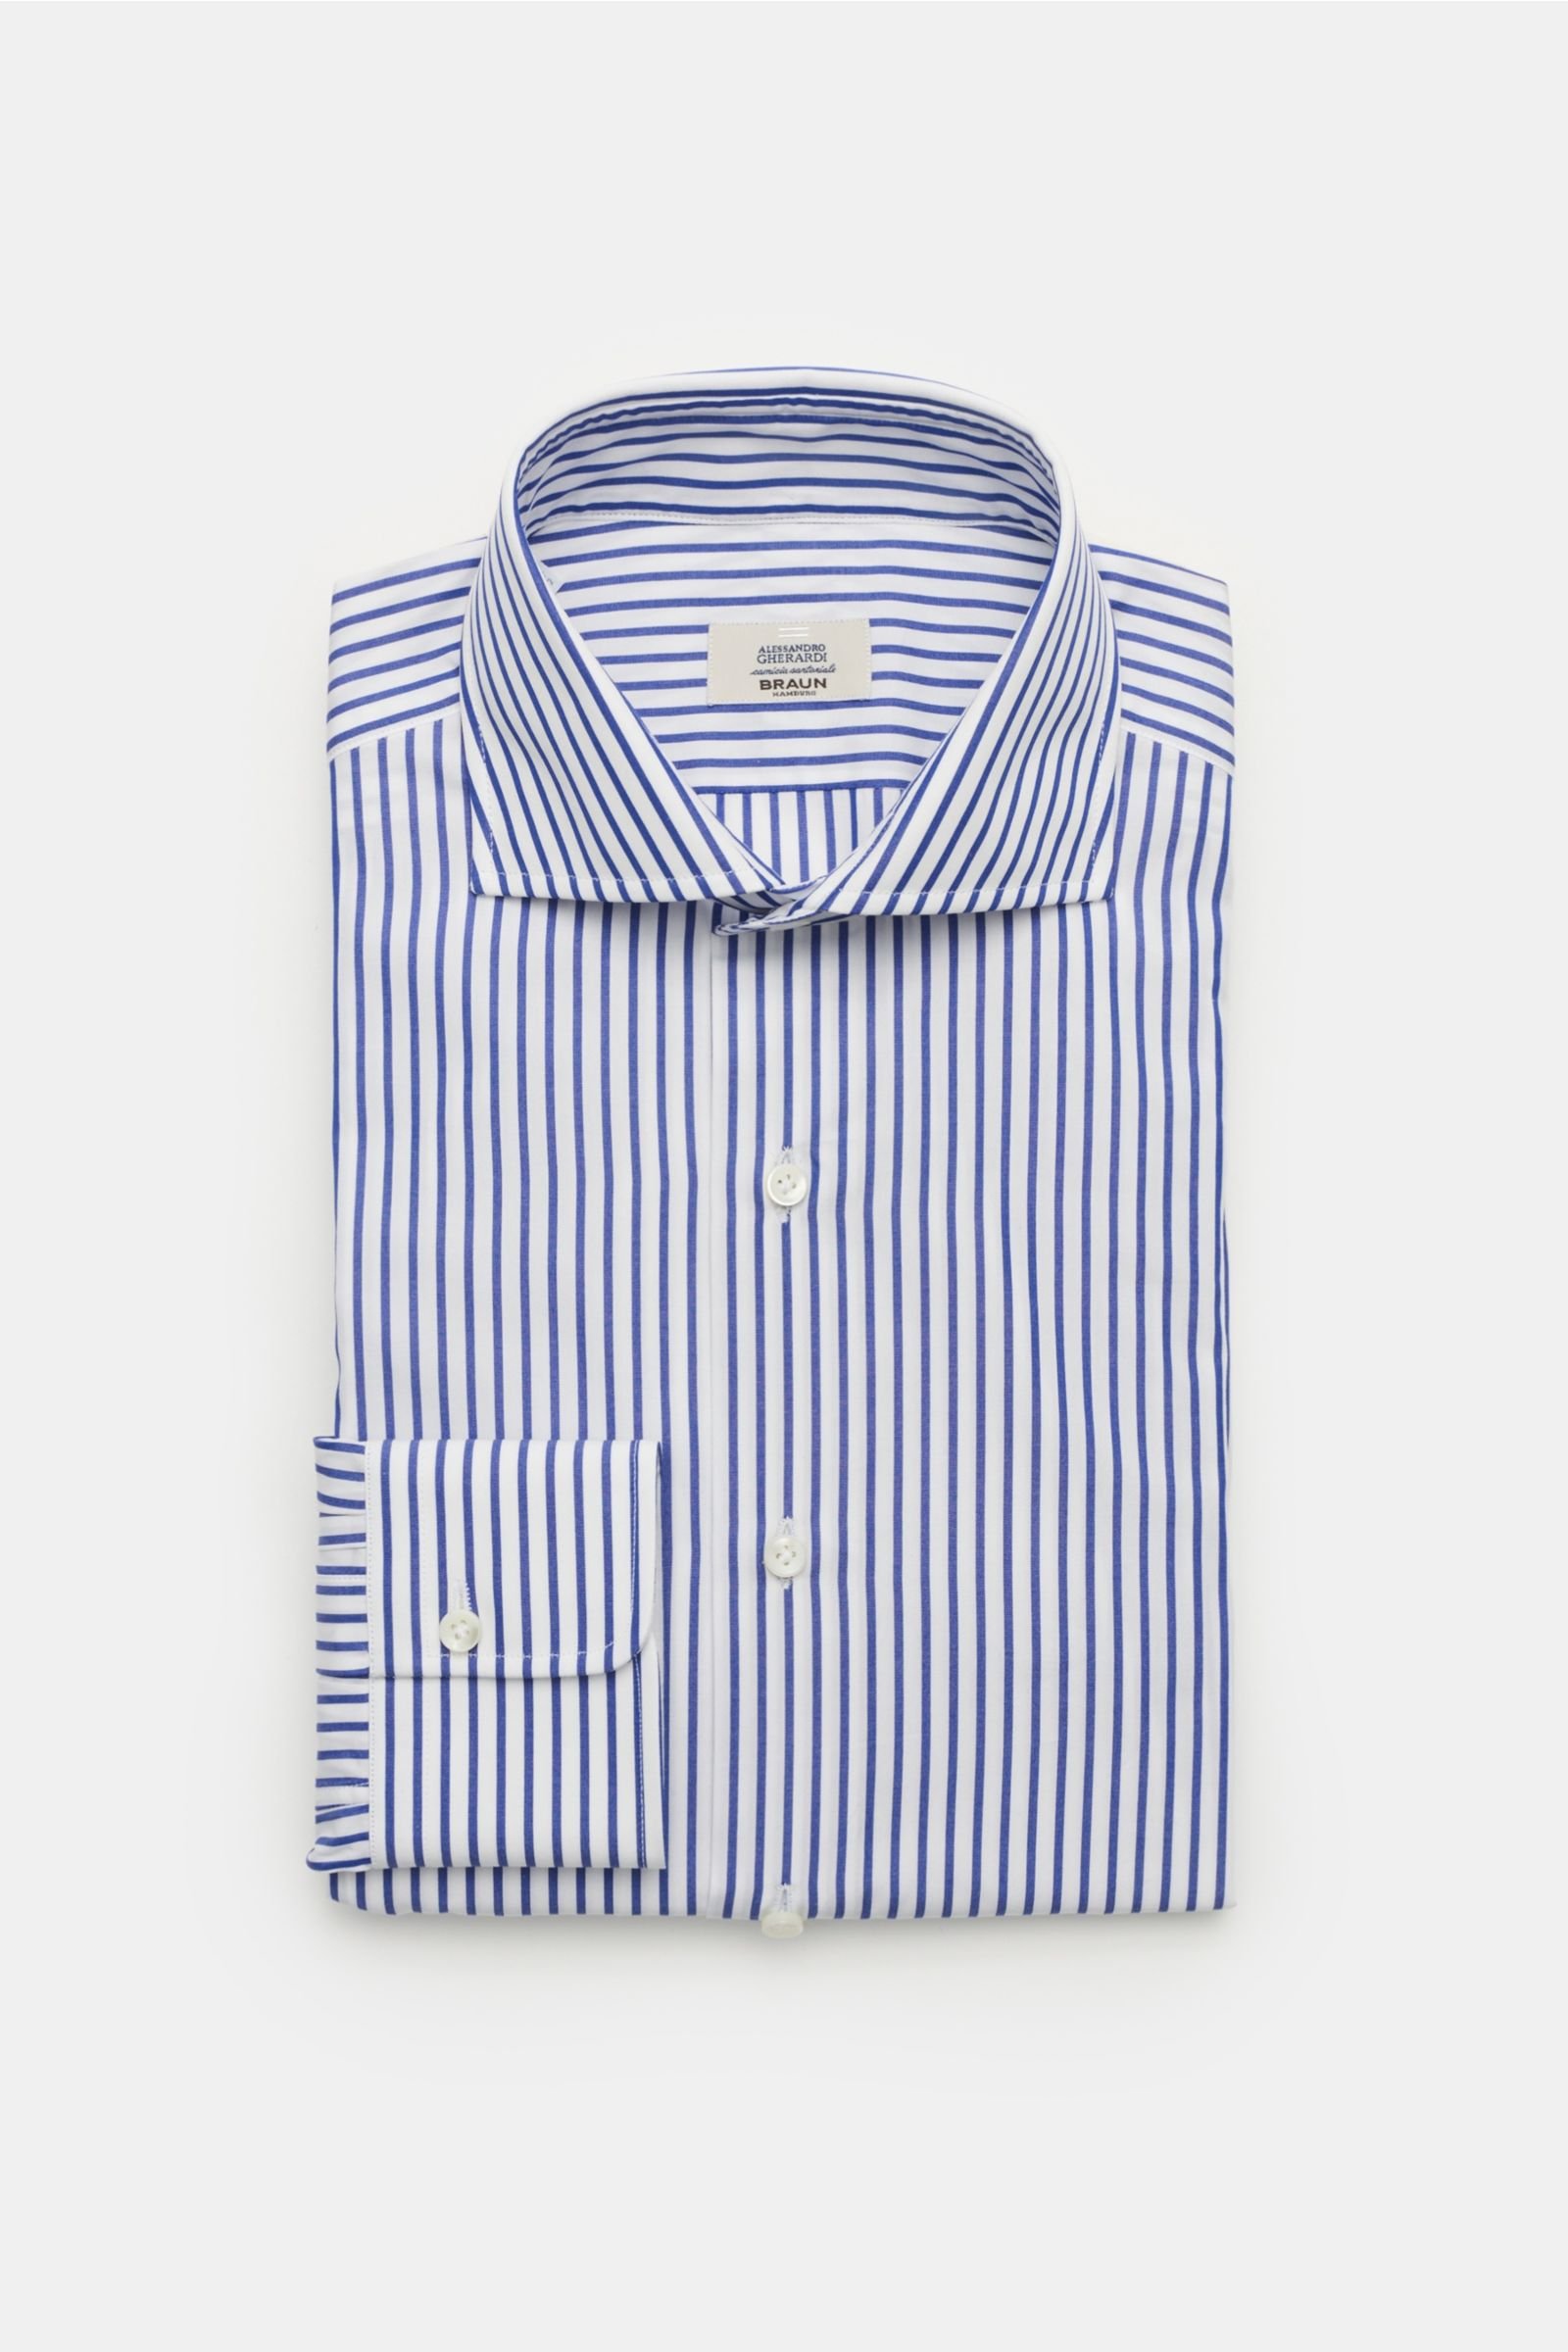 Business shirt shark collar navy/white striped